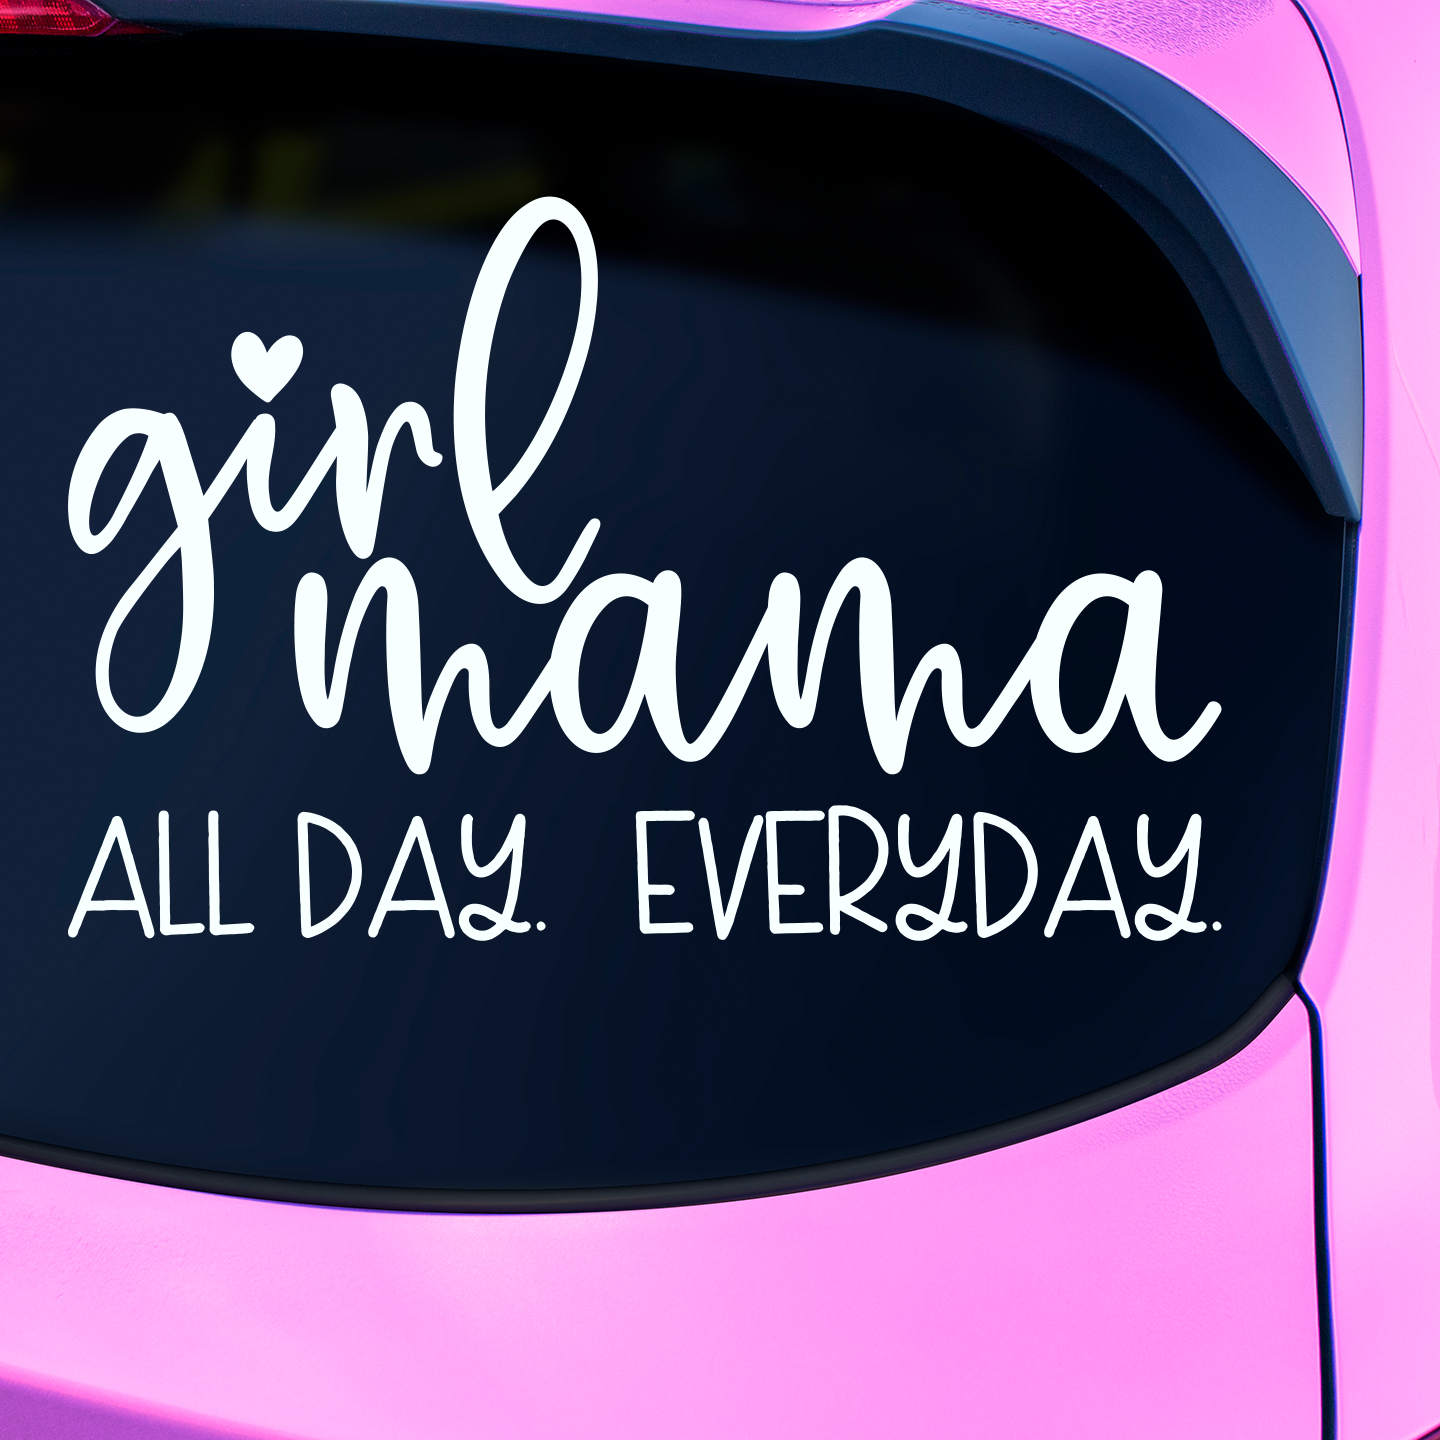 Girl Mama Sticker